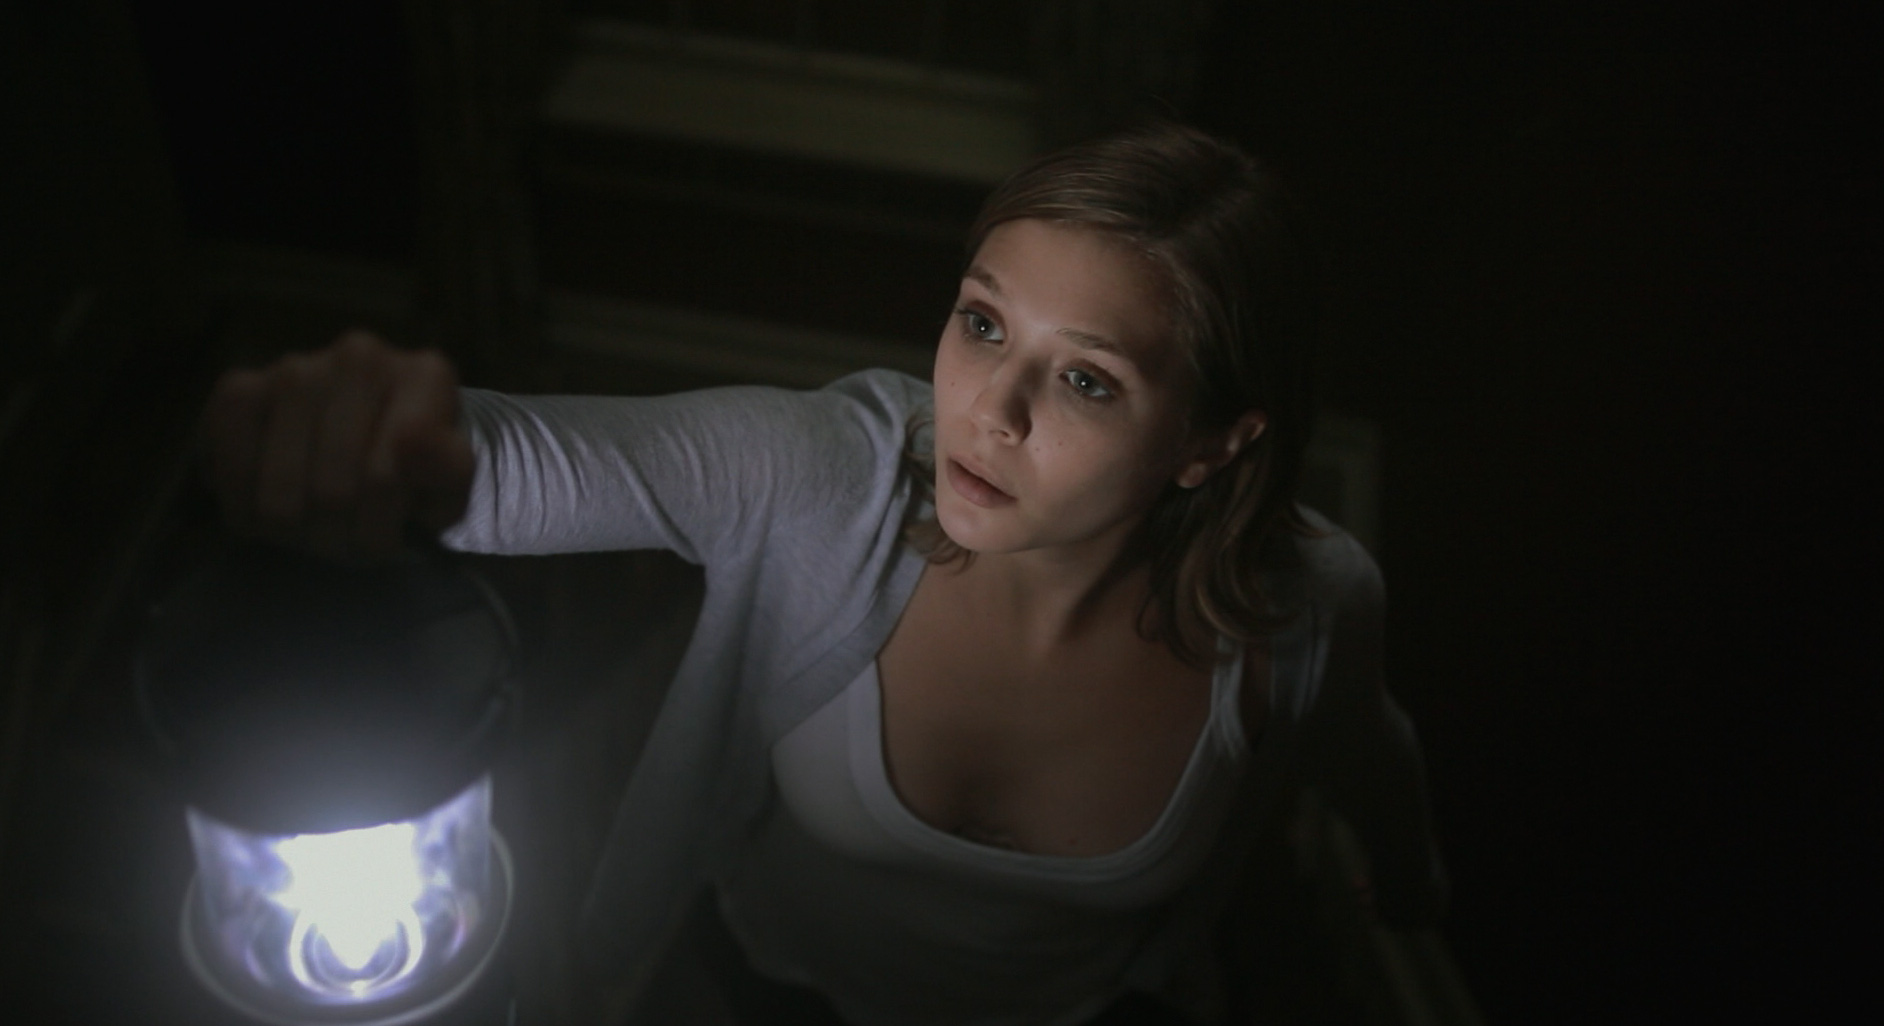 Elizabeth Olsen investigates the haunted house in Silent House (2011)